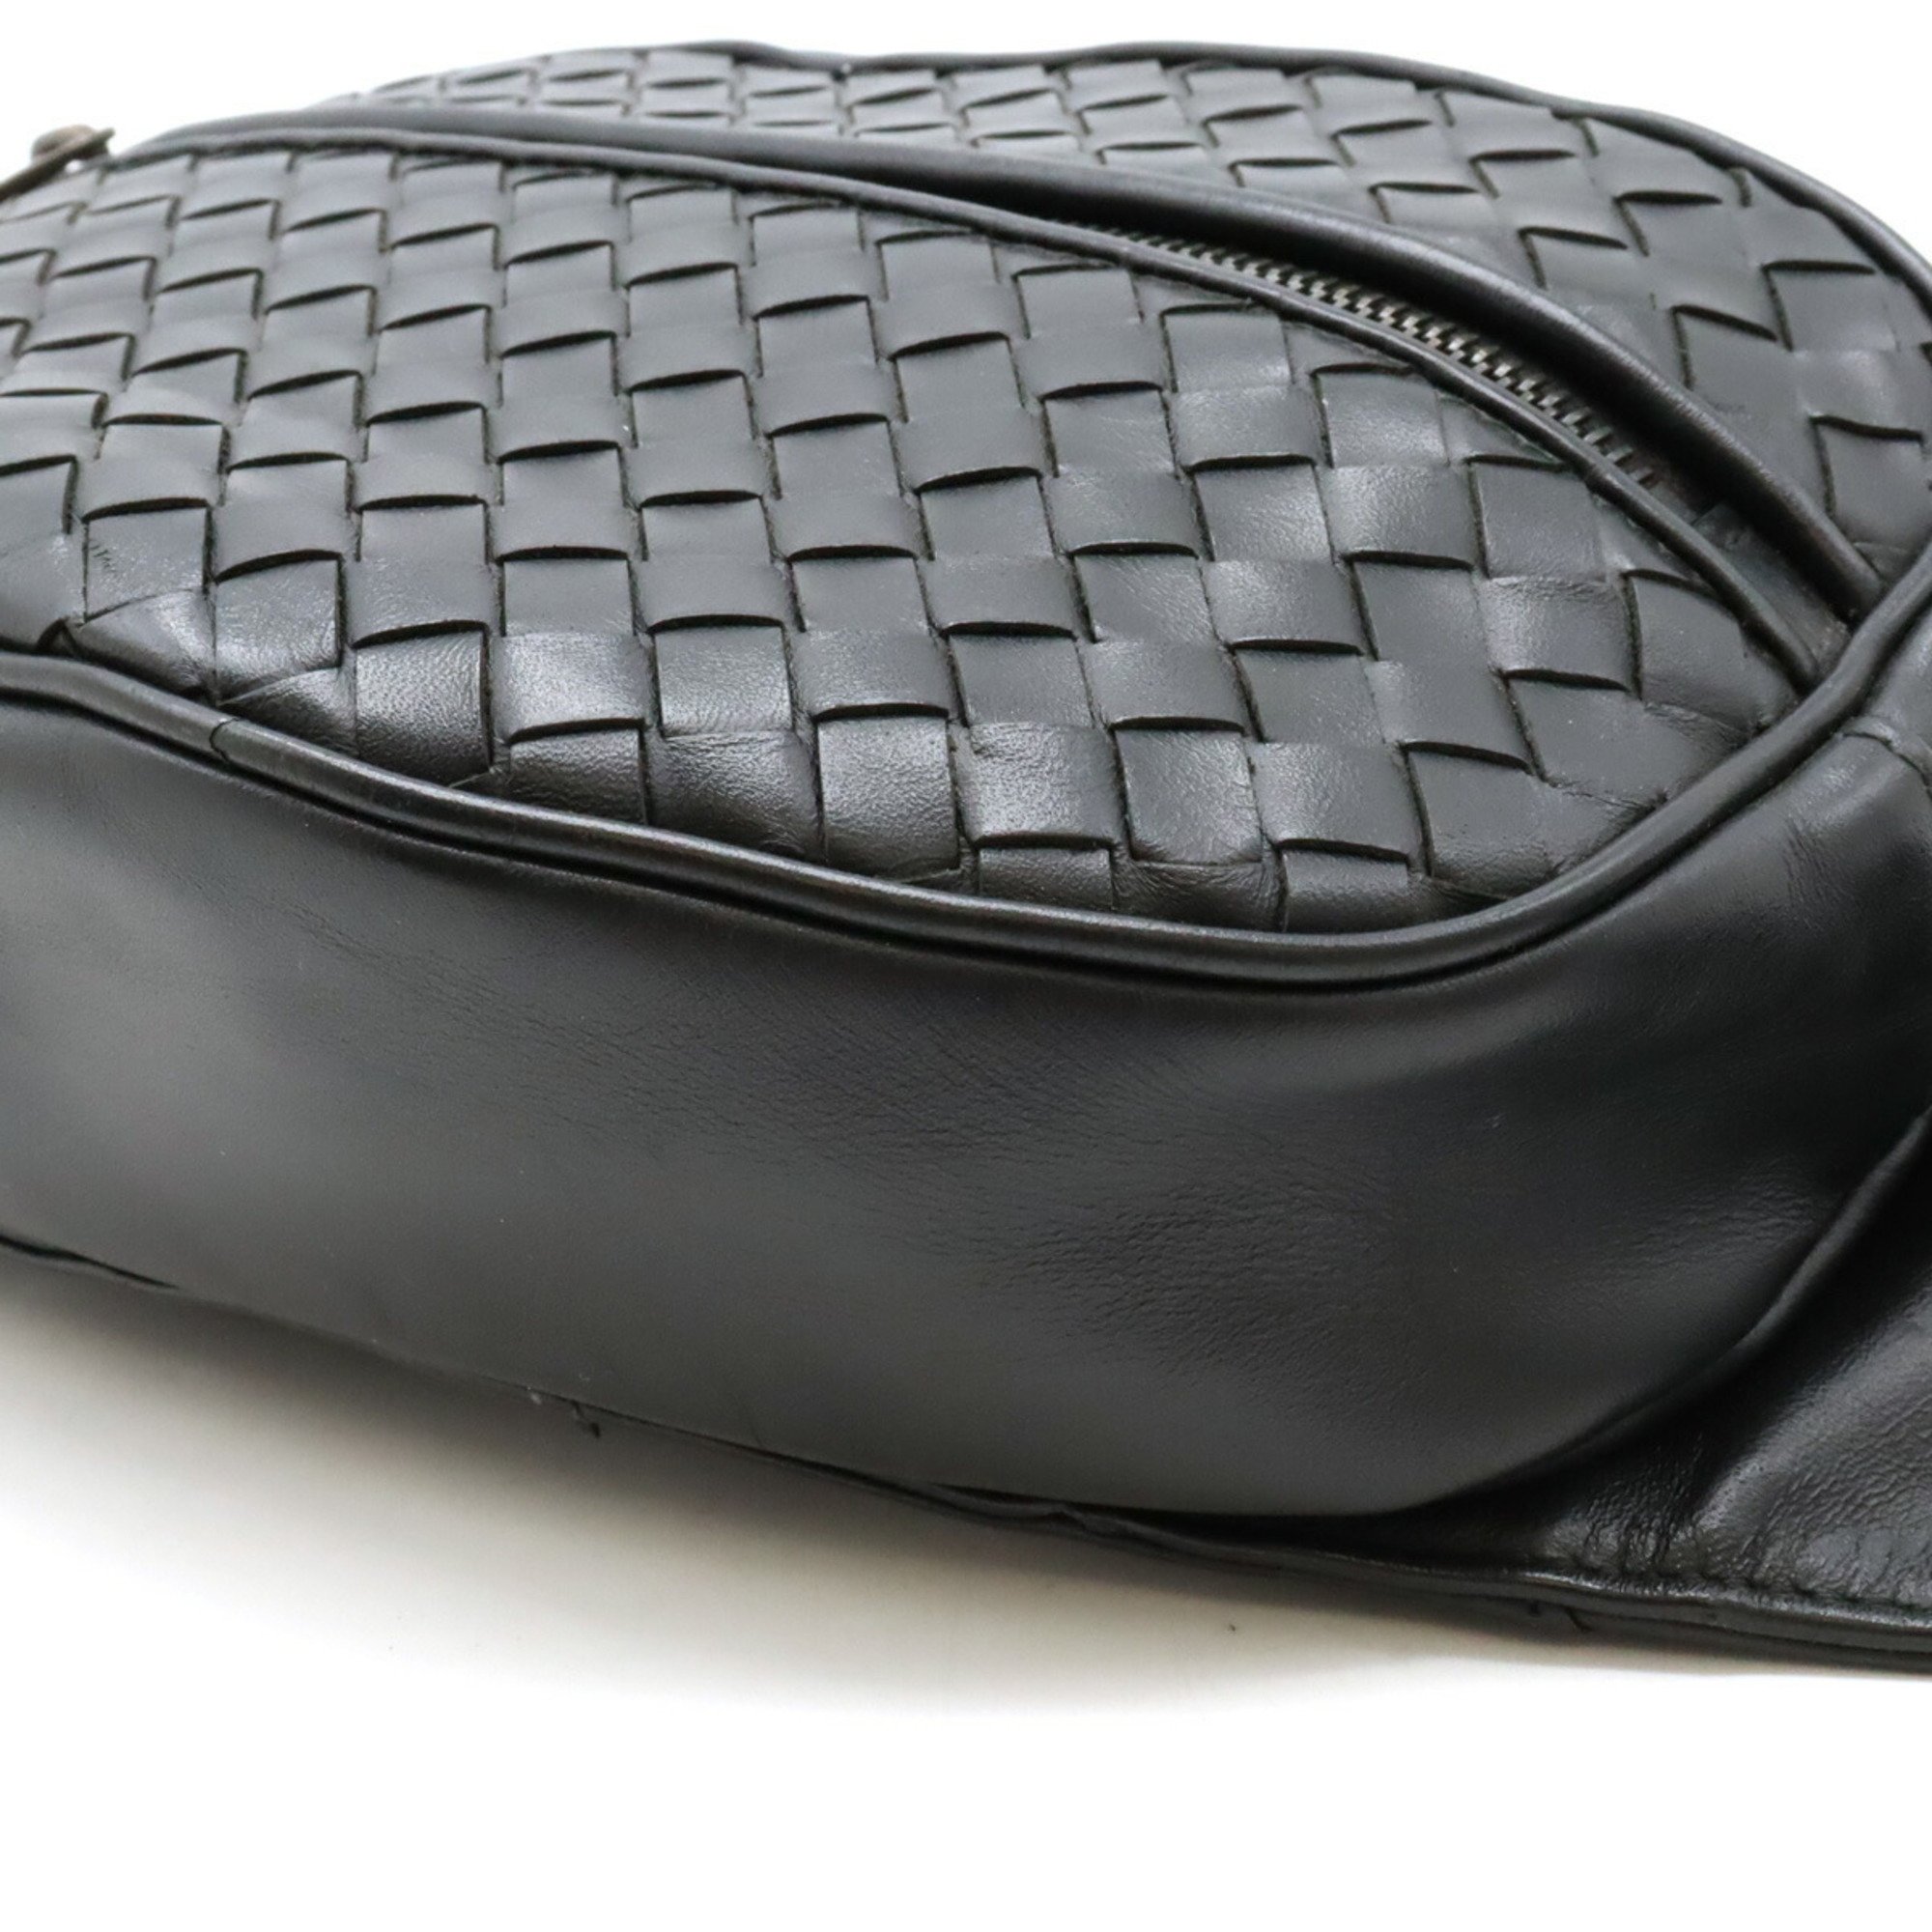 BOTTEGA VENETA Bottega Veneta Intrecciato Body Bag Waist Pouch Leather Black 520452